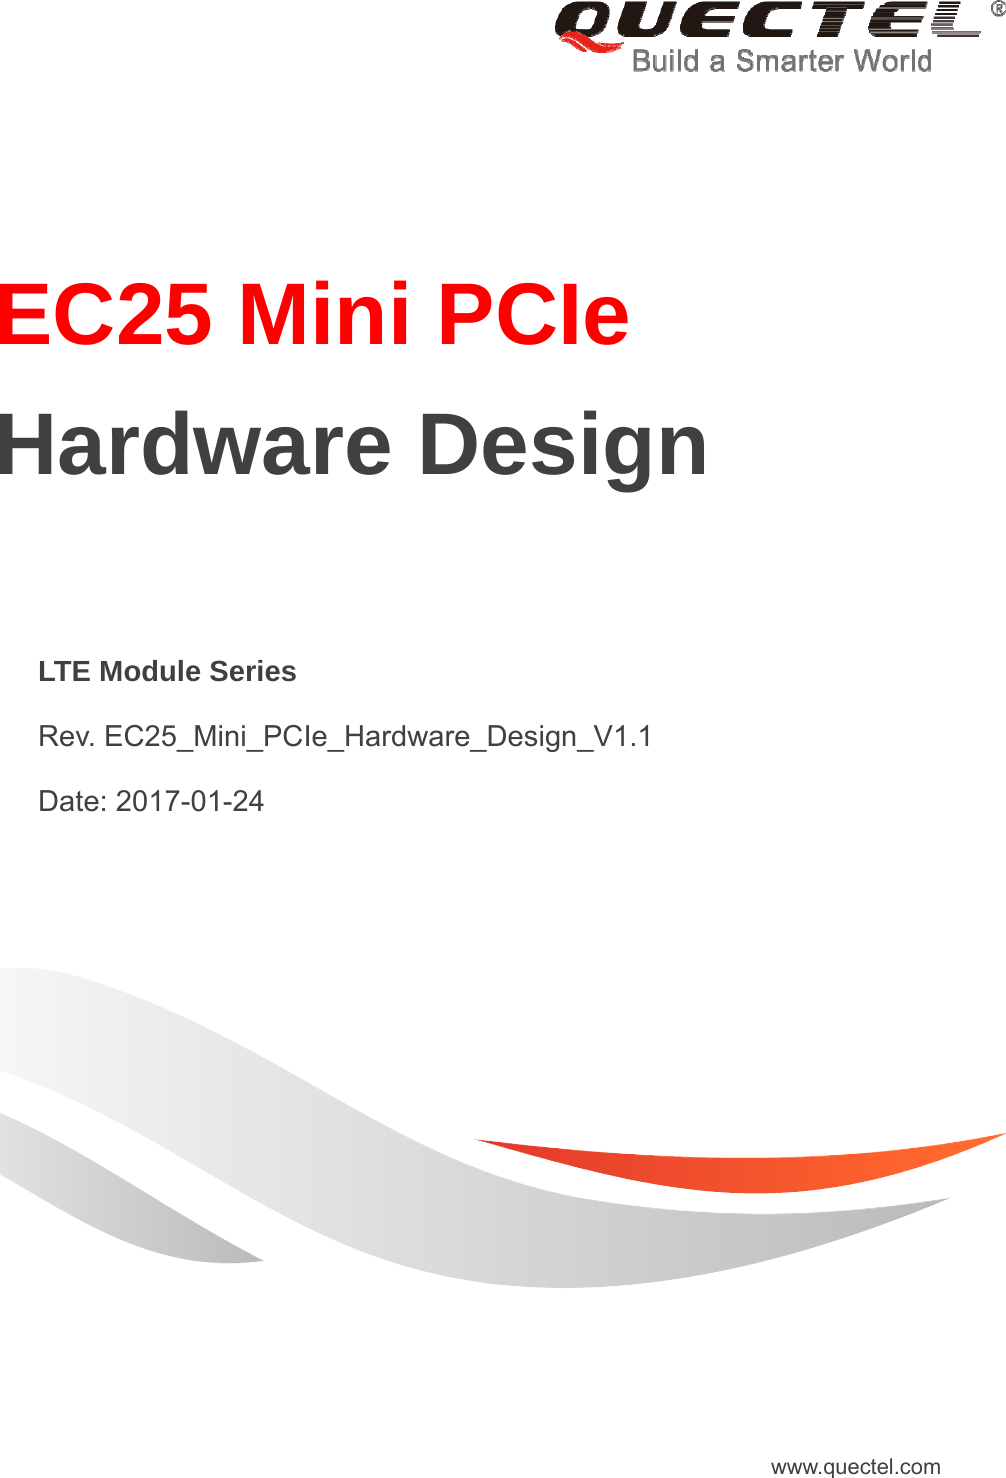     EC25 Mini PCIe Hardware Design  LTE Module Series  Rev. EC25_Mini_PCIe_Hardware_Design_V1.1  Date: 2017-01-24 www.quectel.com